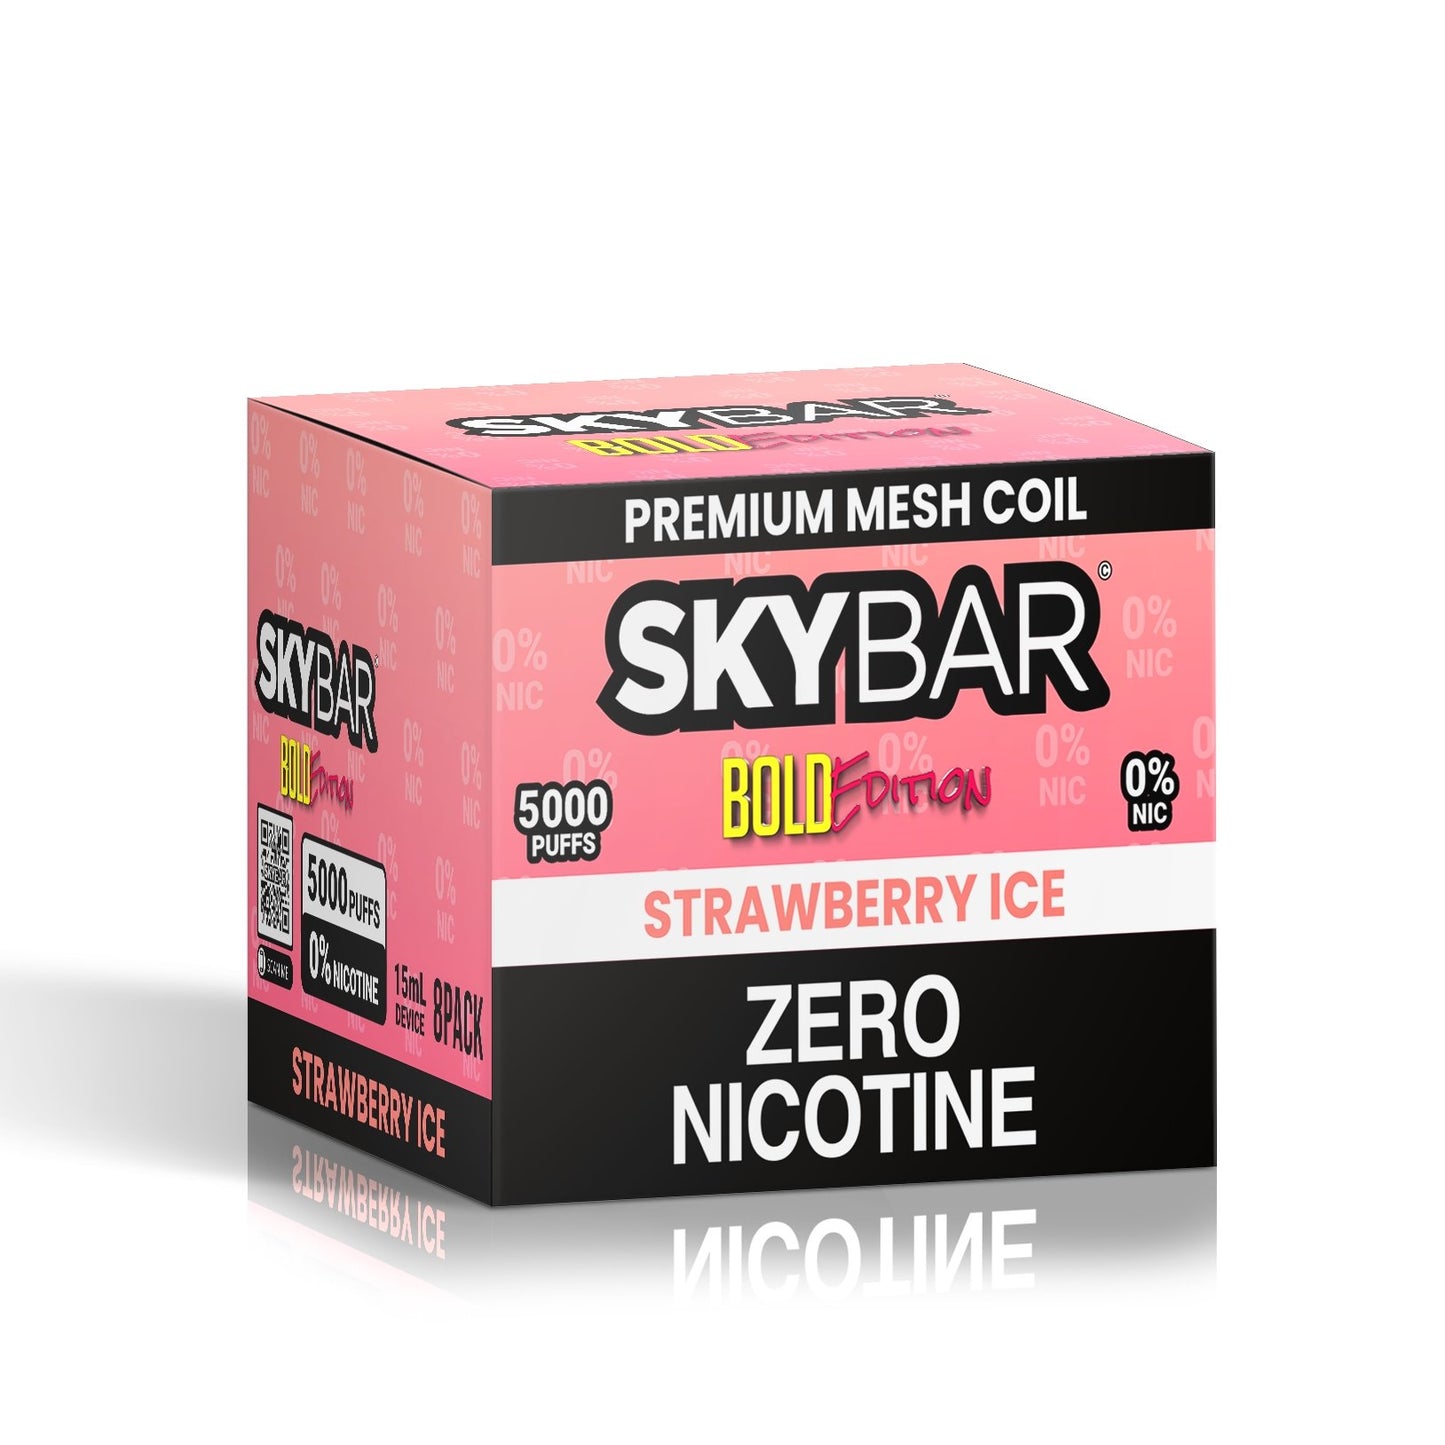 SKYBAR BOLD 5000 PUFFS 5% Nic ( Wholesale 8ct Box ) - Skybar